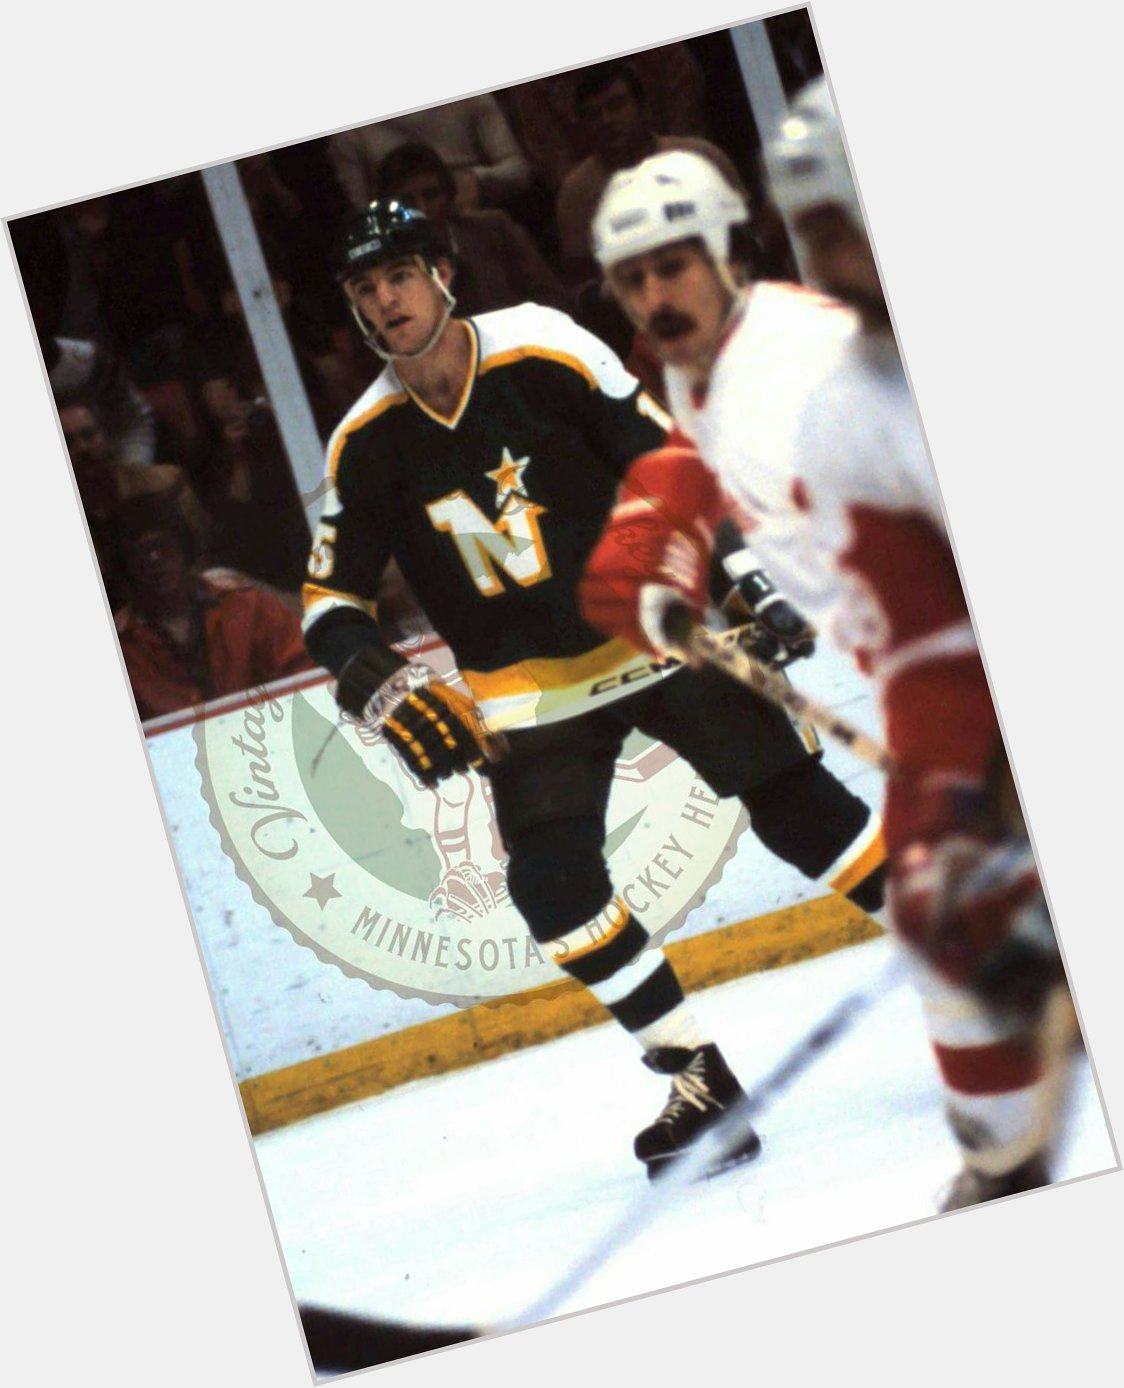 Happy 59th birthday today to former North Stars NHL centerman - Bobby Smith born in North Sydney, Nova Scotia 